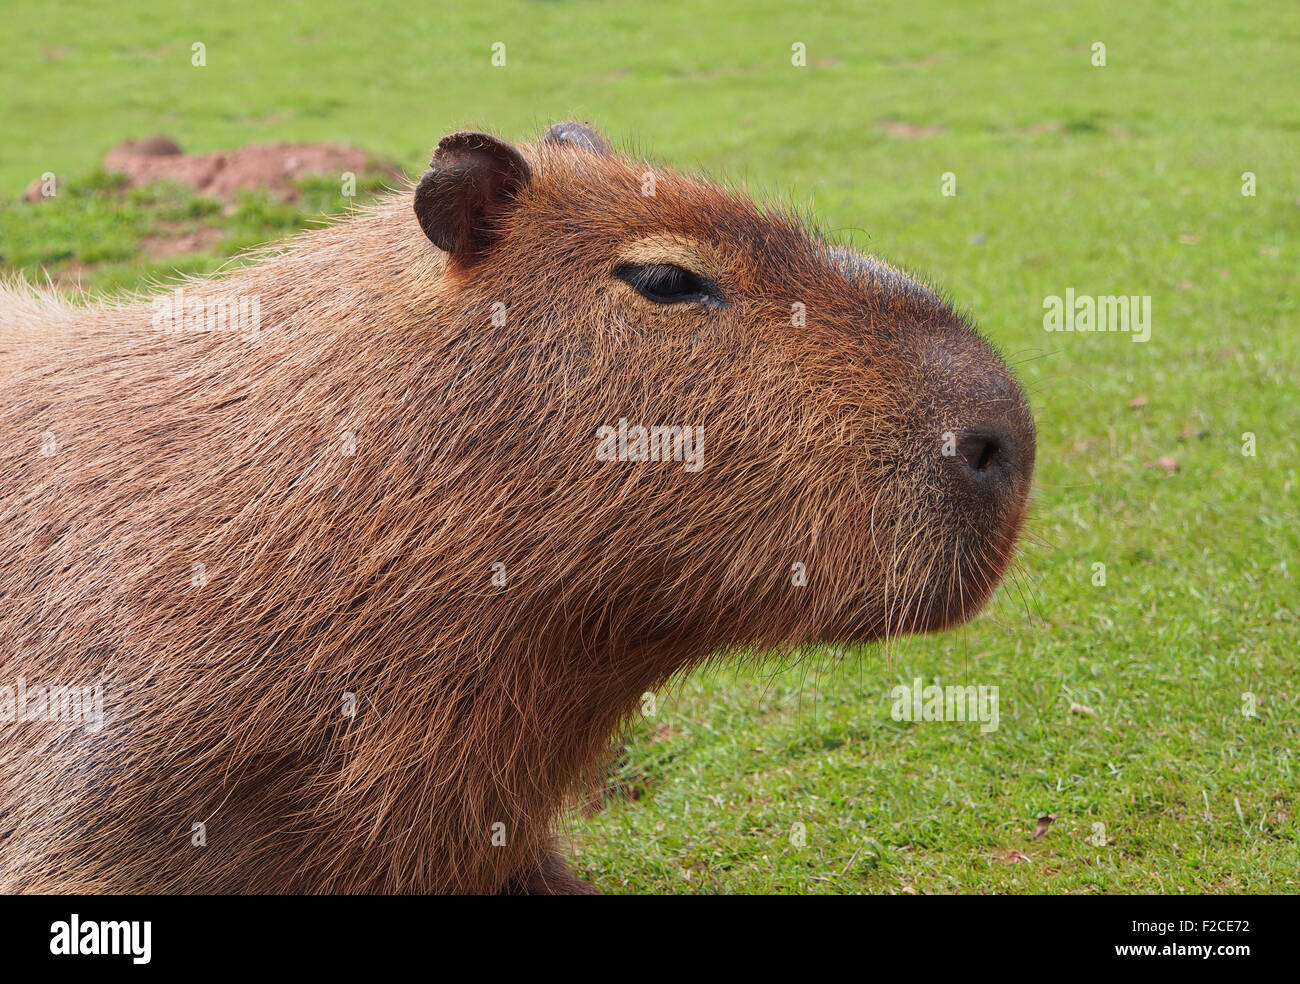 Capybara ( hydrochoerus hydrochaeris) at the Lakeland Safari Zoo in Cumbria, England, UK. Stock Photo